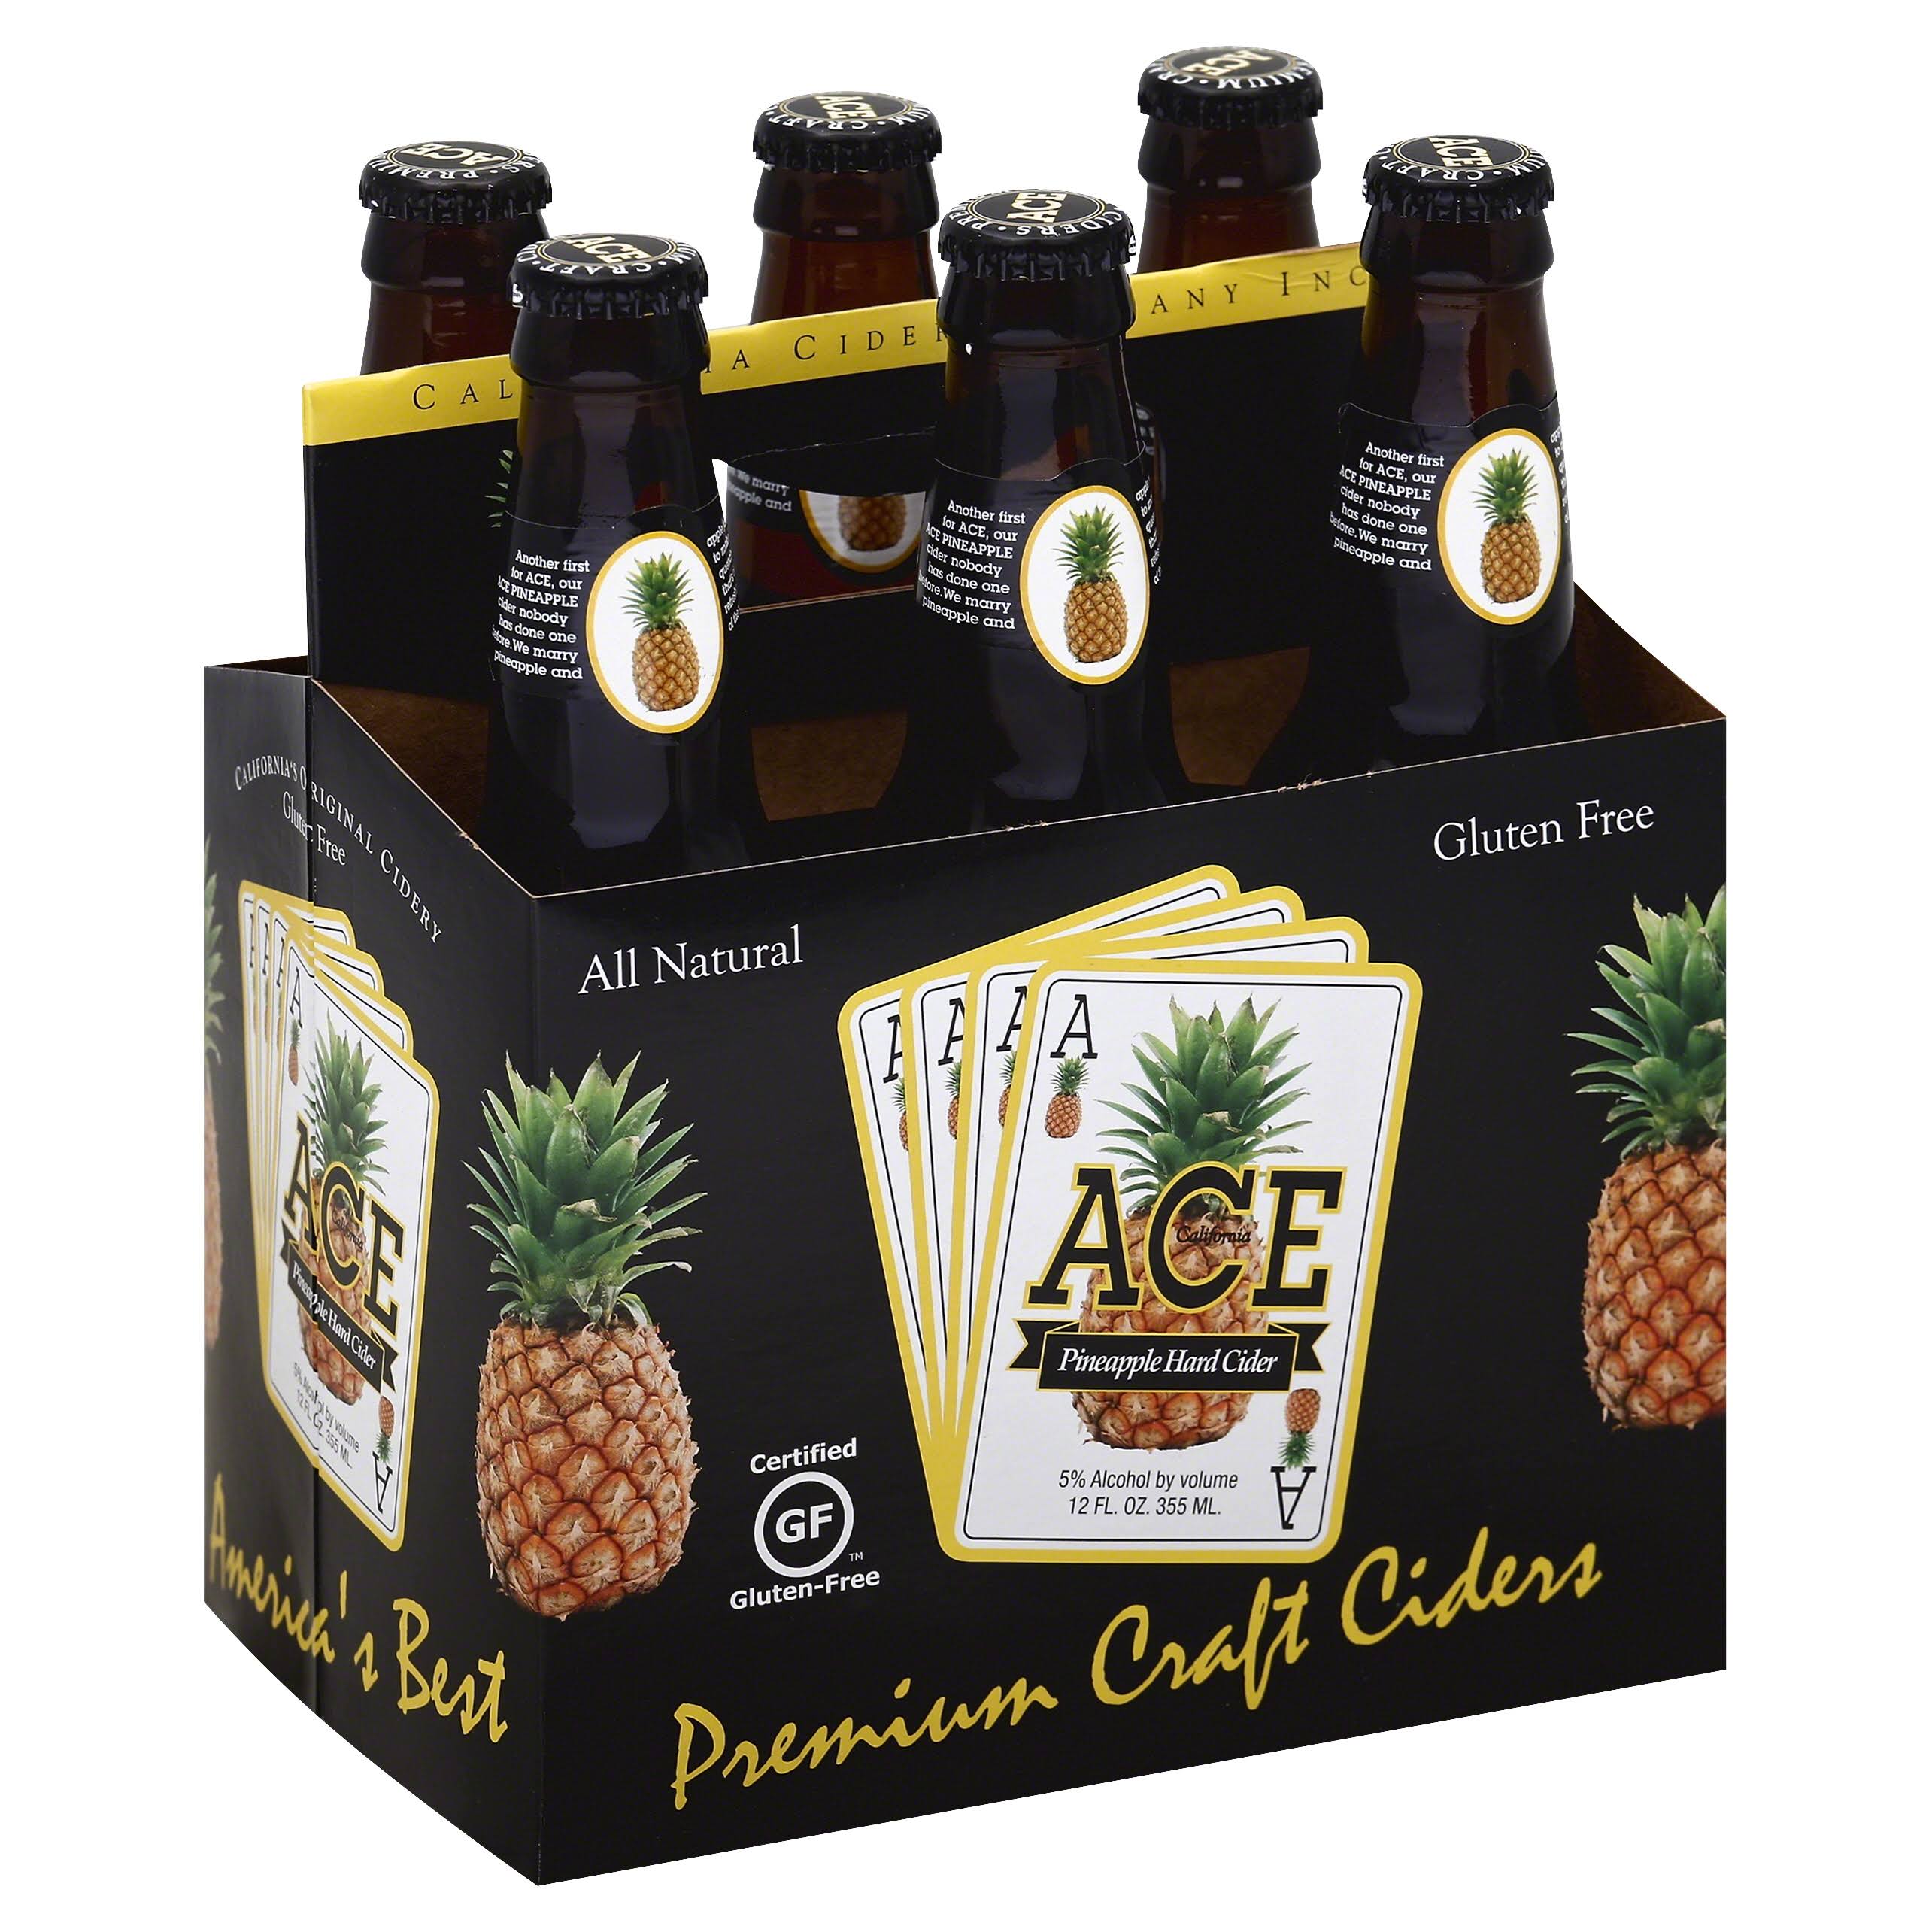 Ace Hard Cider, Pineapple, Sonoma County - 6 pack, 12 fl oz bottles